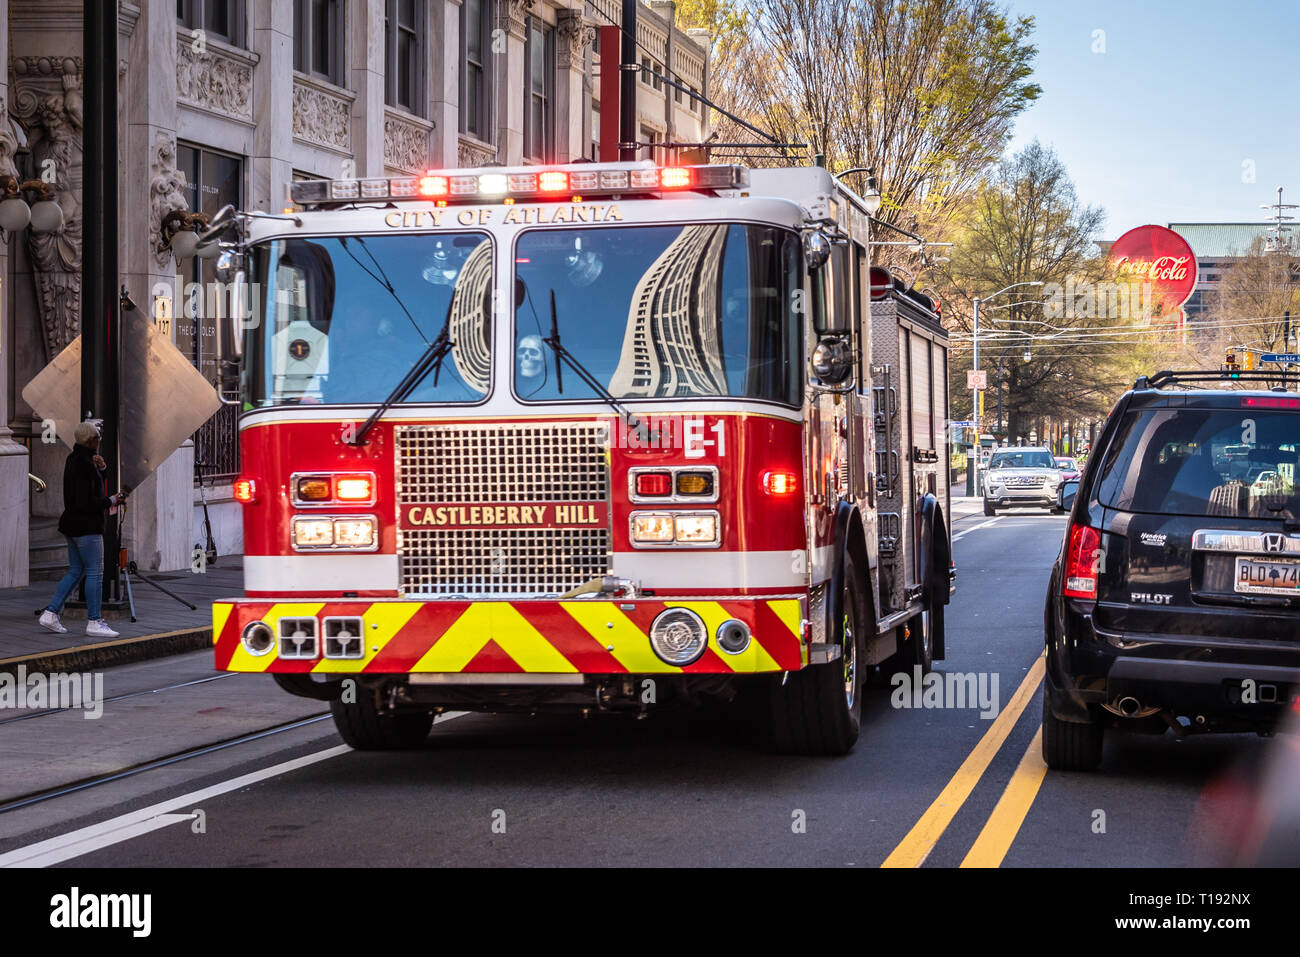 City of Atlanta fire engine near Five Points in downtown Atlanta, Georgia responding to an emergency. (USA) Stock Photo